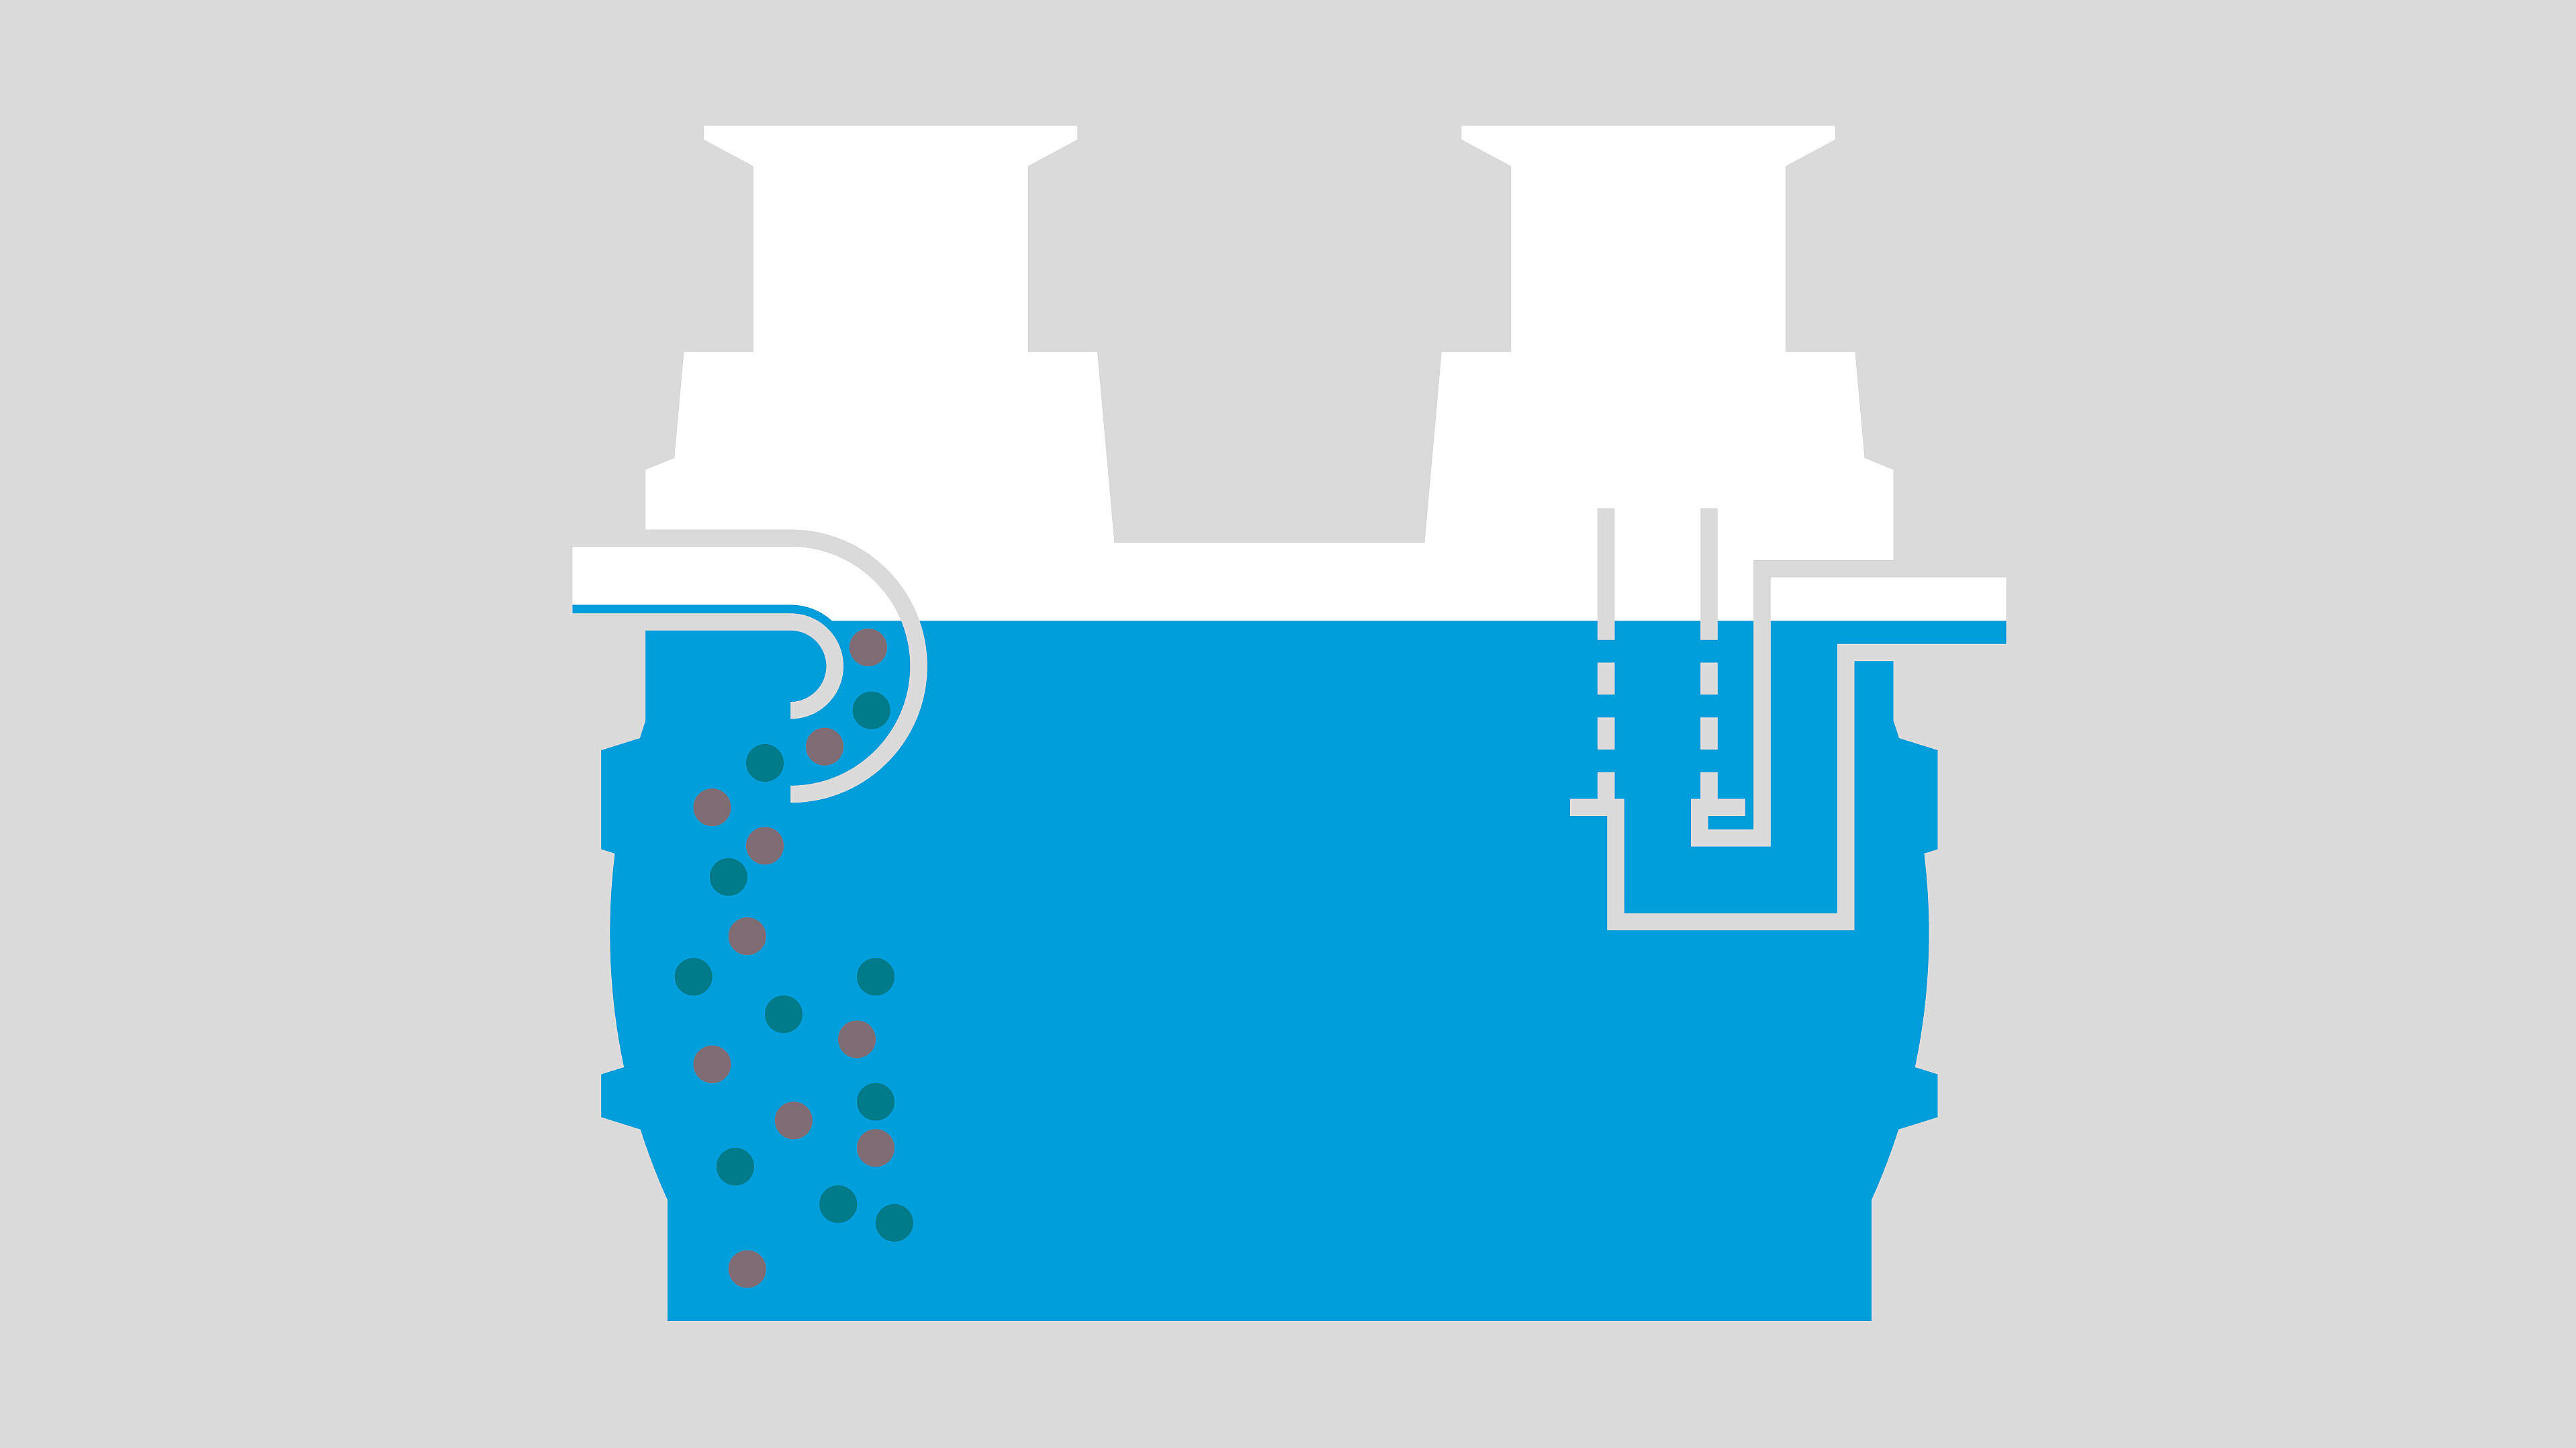 De werking van een lichtevloeistoffenafscheider, stap 1: instromend afvalwater